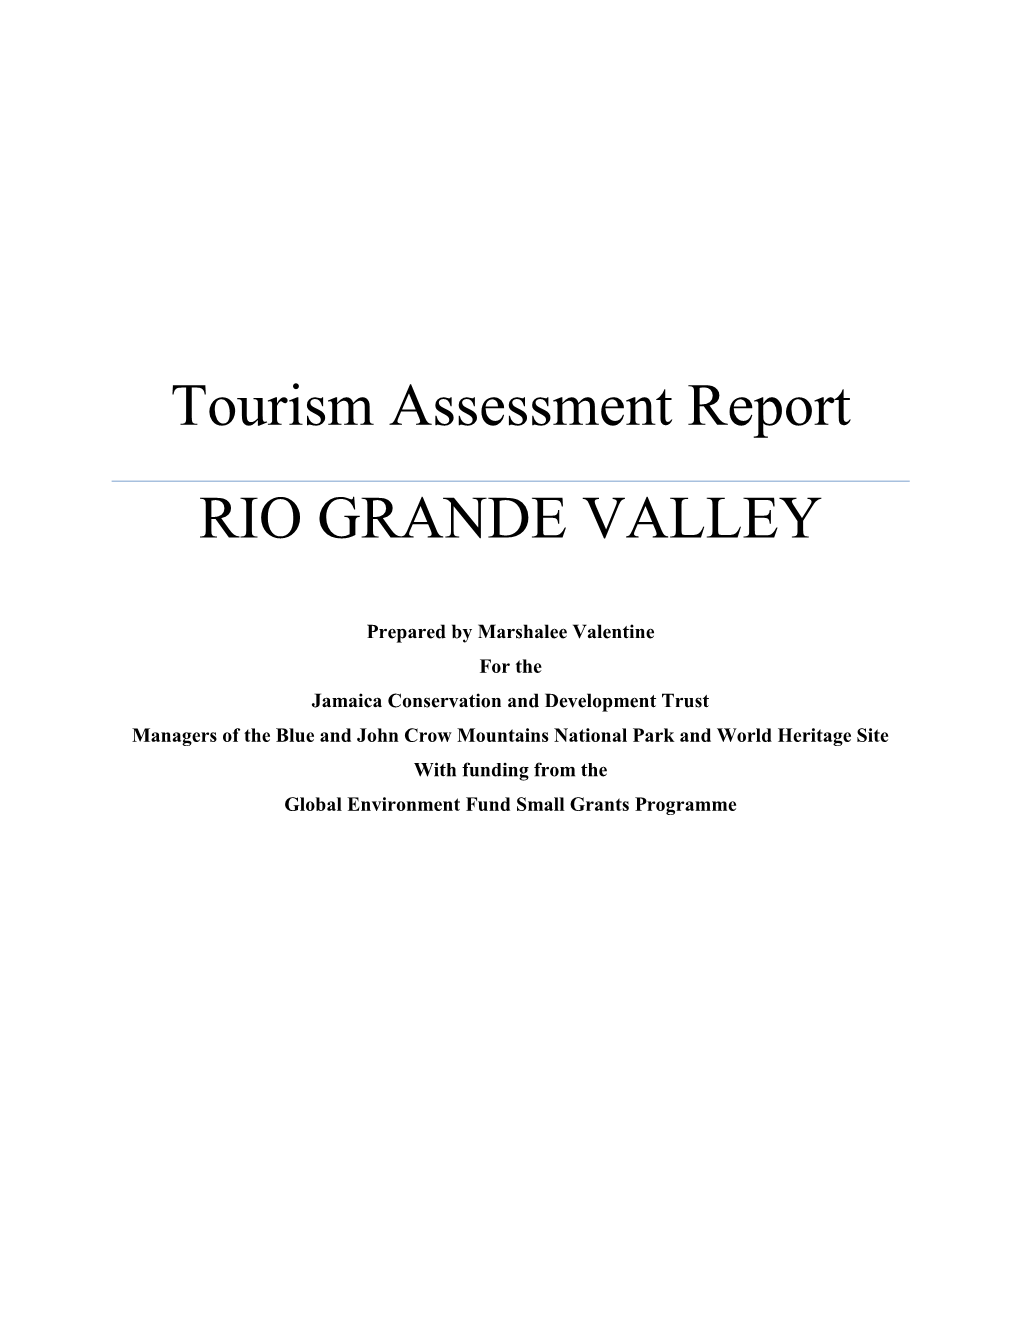 Rio Grande Valley Tourism Assessment Report